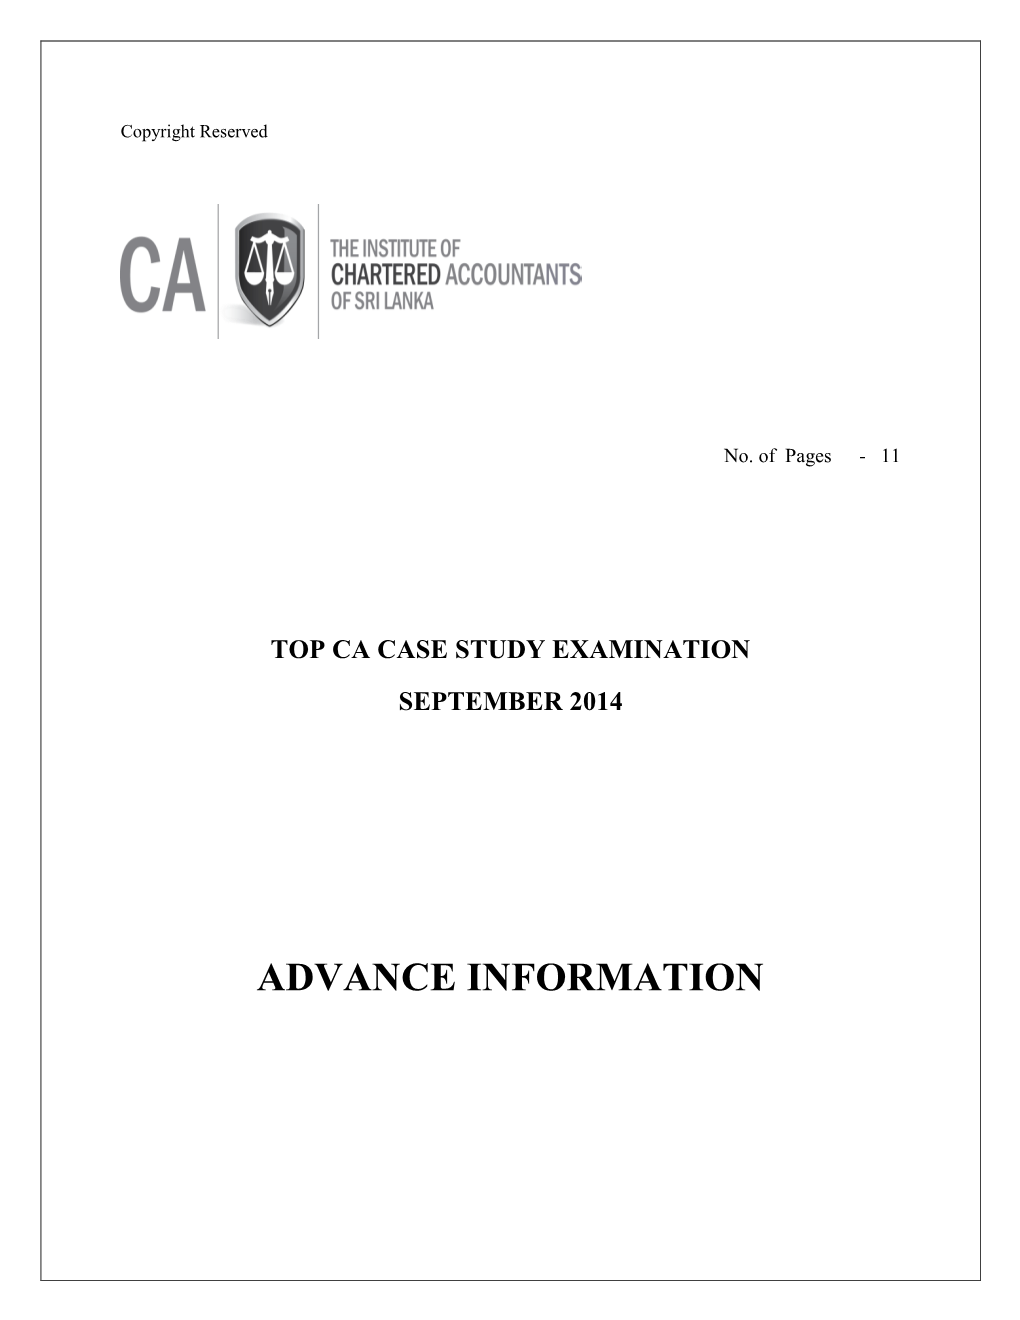 Advance Information – Top CA Case Study